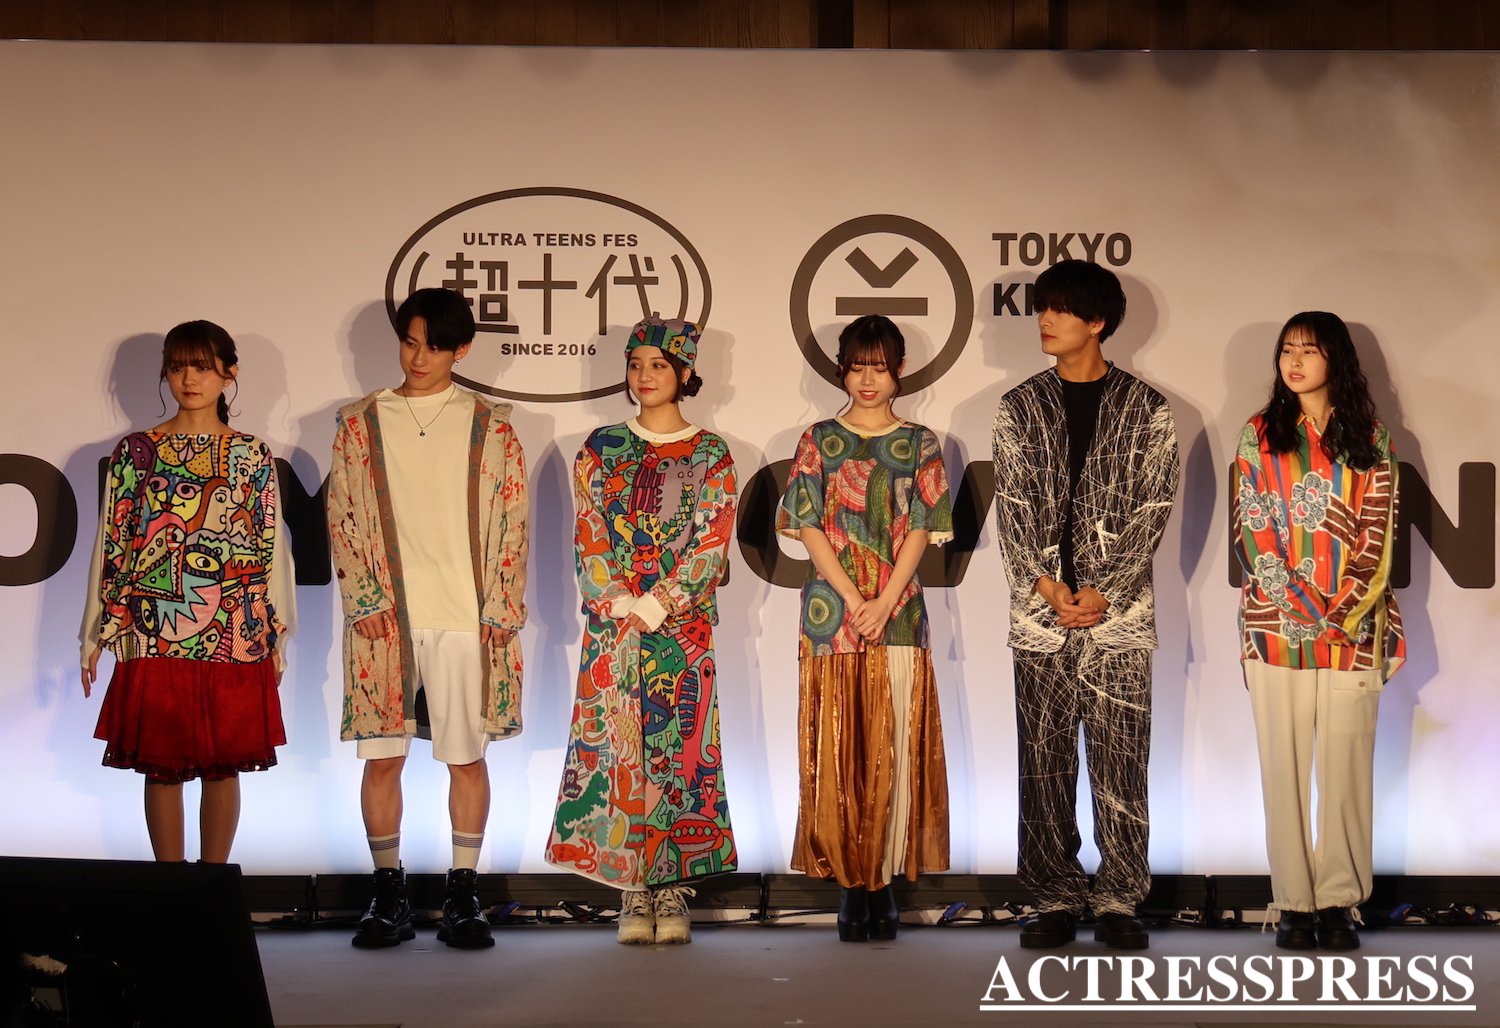 『TOKYO KNIT』×『超十代』ファッションショー『TOKYO LOVE KNIT』開催。実熊瑠琉、内山優花、植村颯太、本望あやか、りゅうと、沢田京海（トメィトゥ）が出演